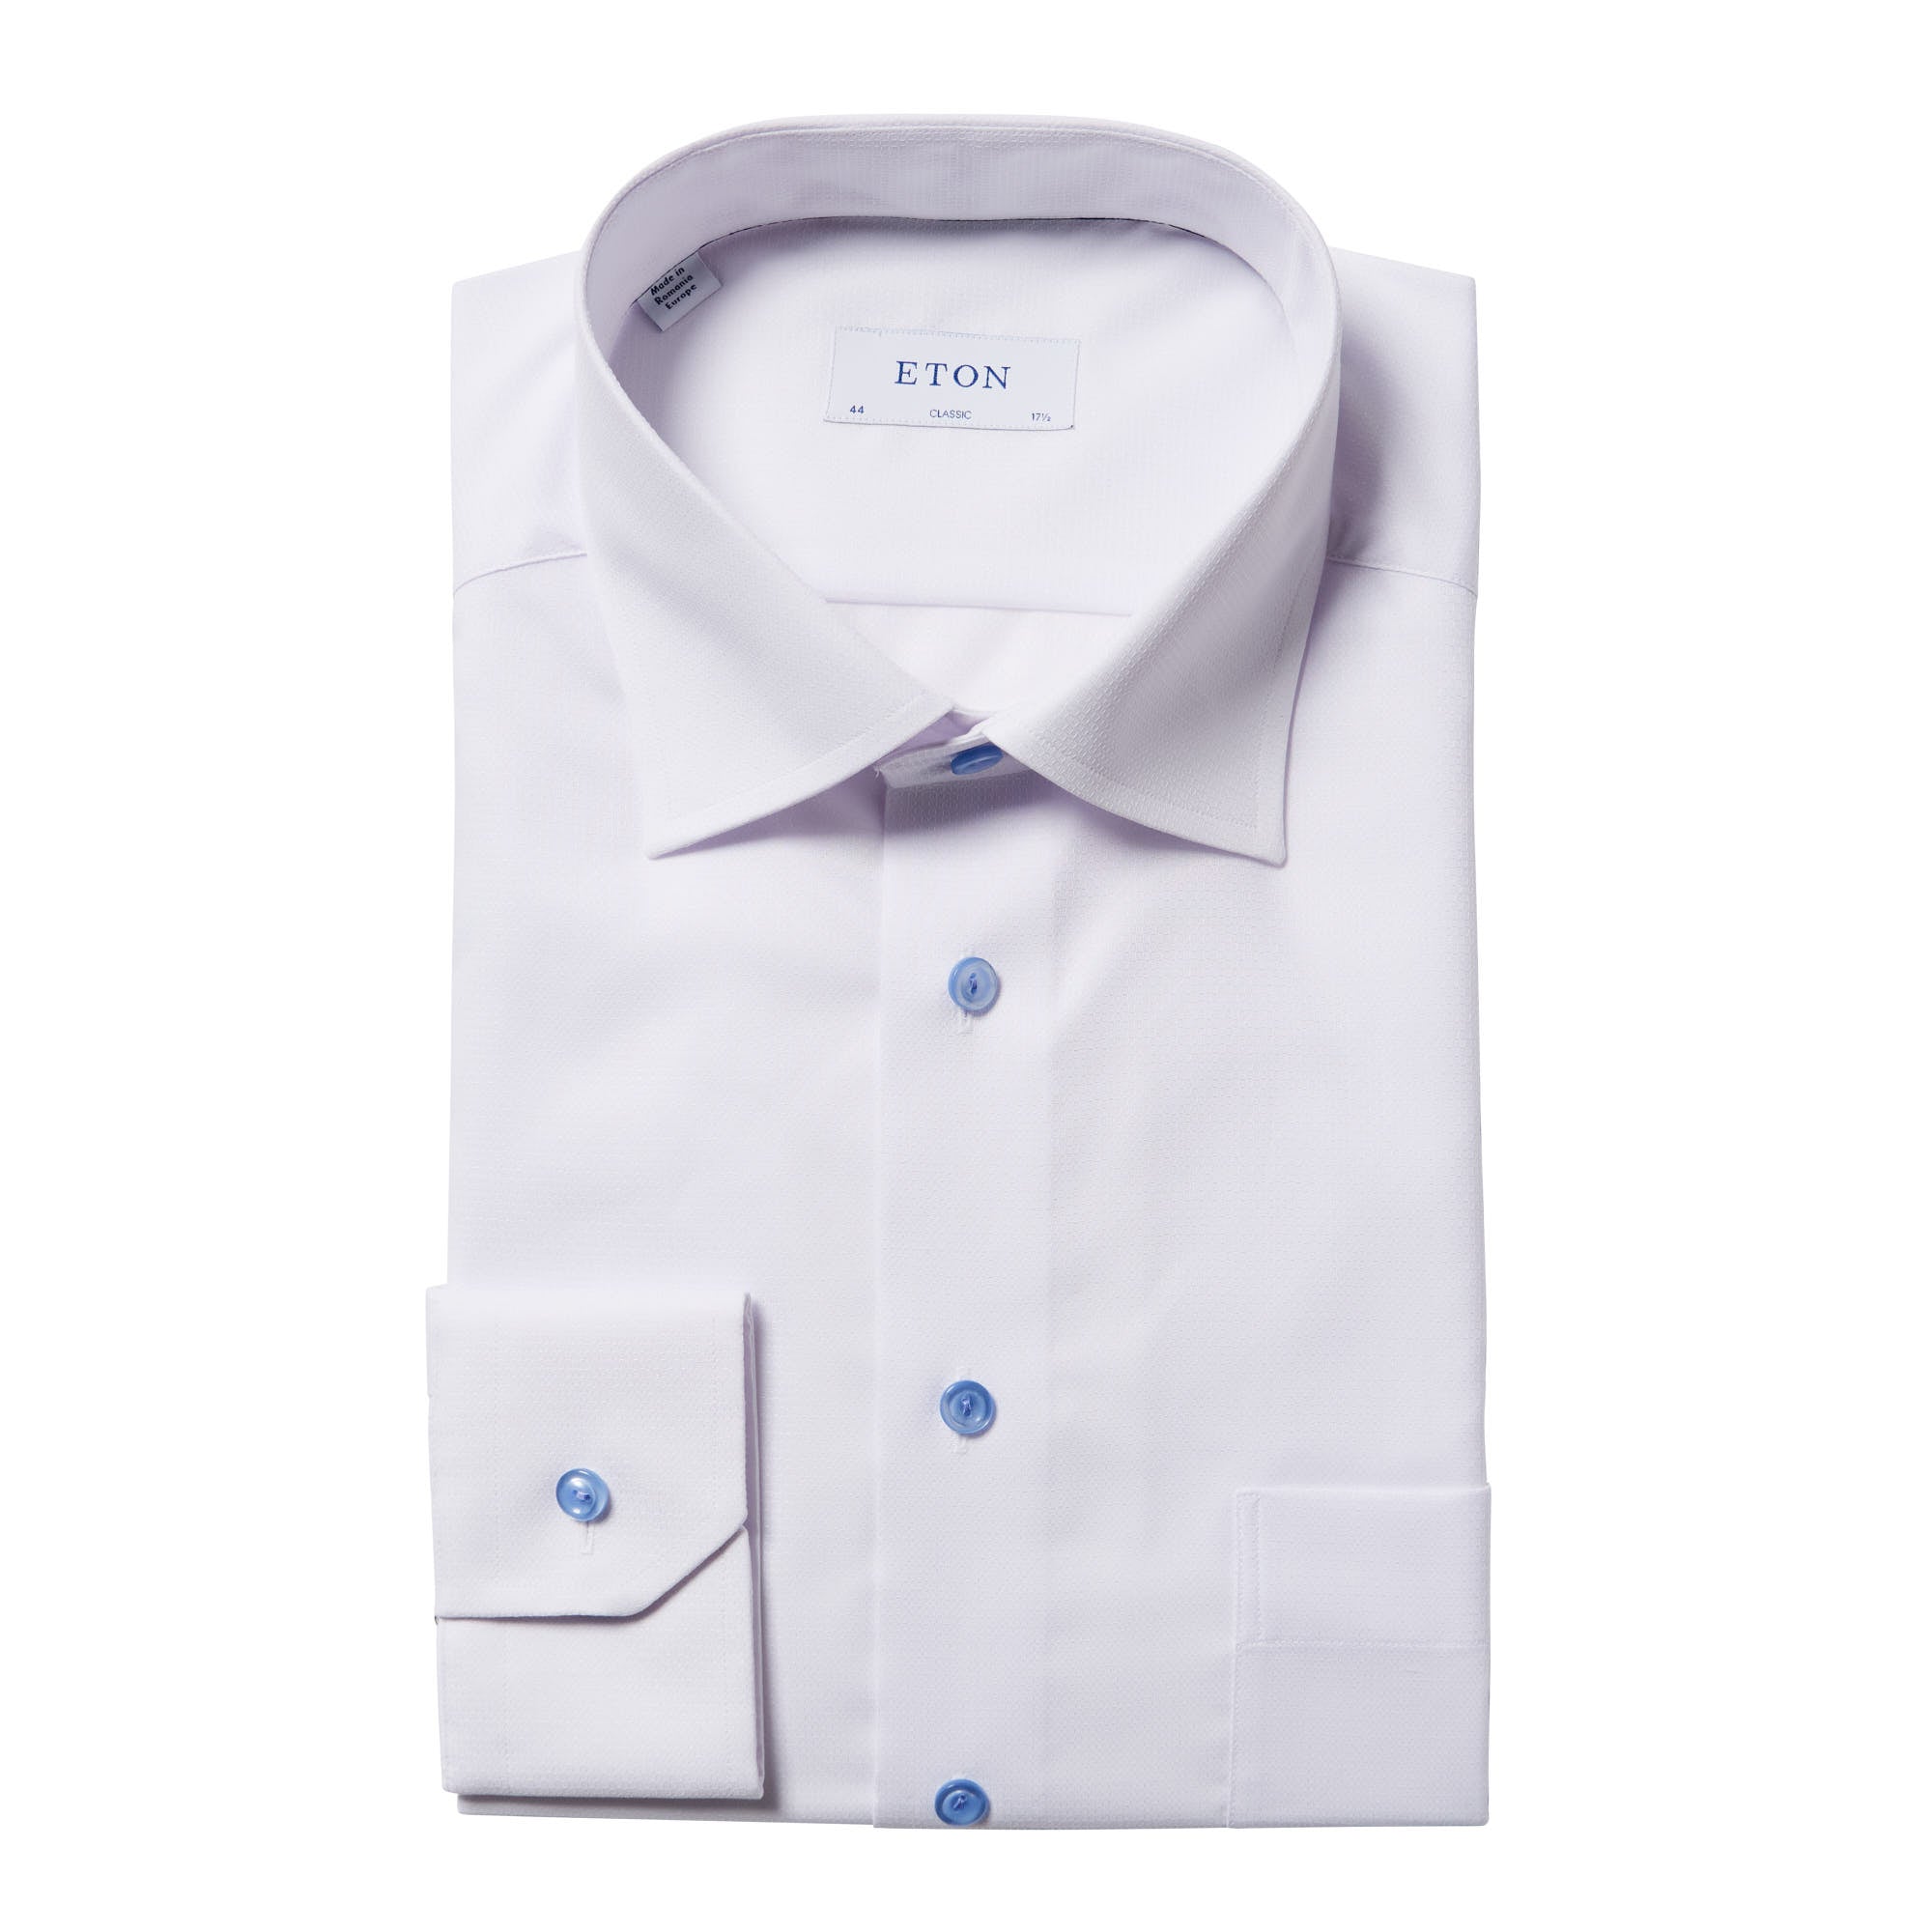 ETON Cutaway Long Sleeve Shirt Single Cuff Classic Fit WHITE - Henry BucksShirts01AW240012 - WHTE - SC - CLAS - 44